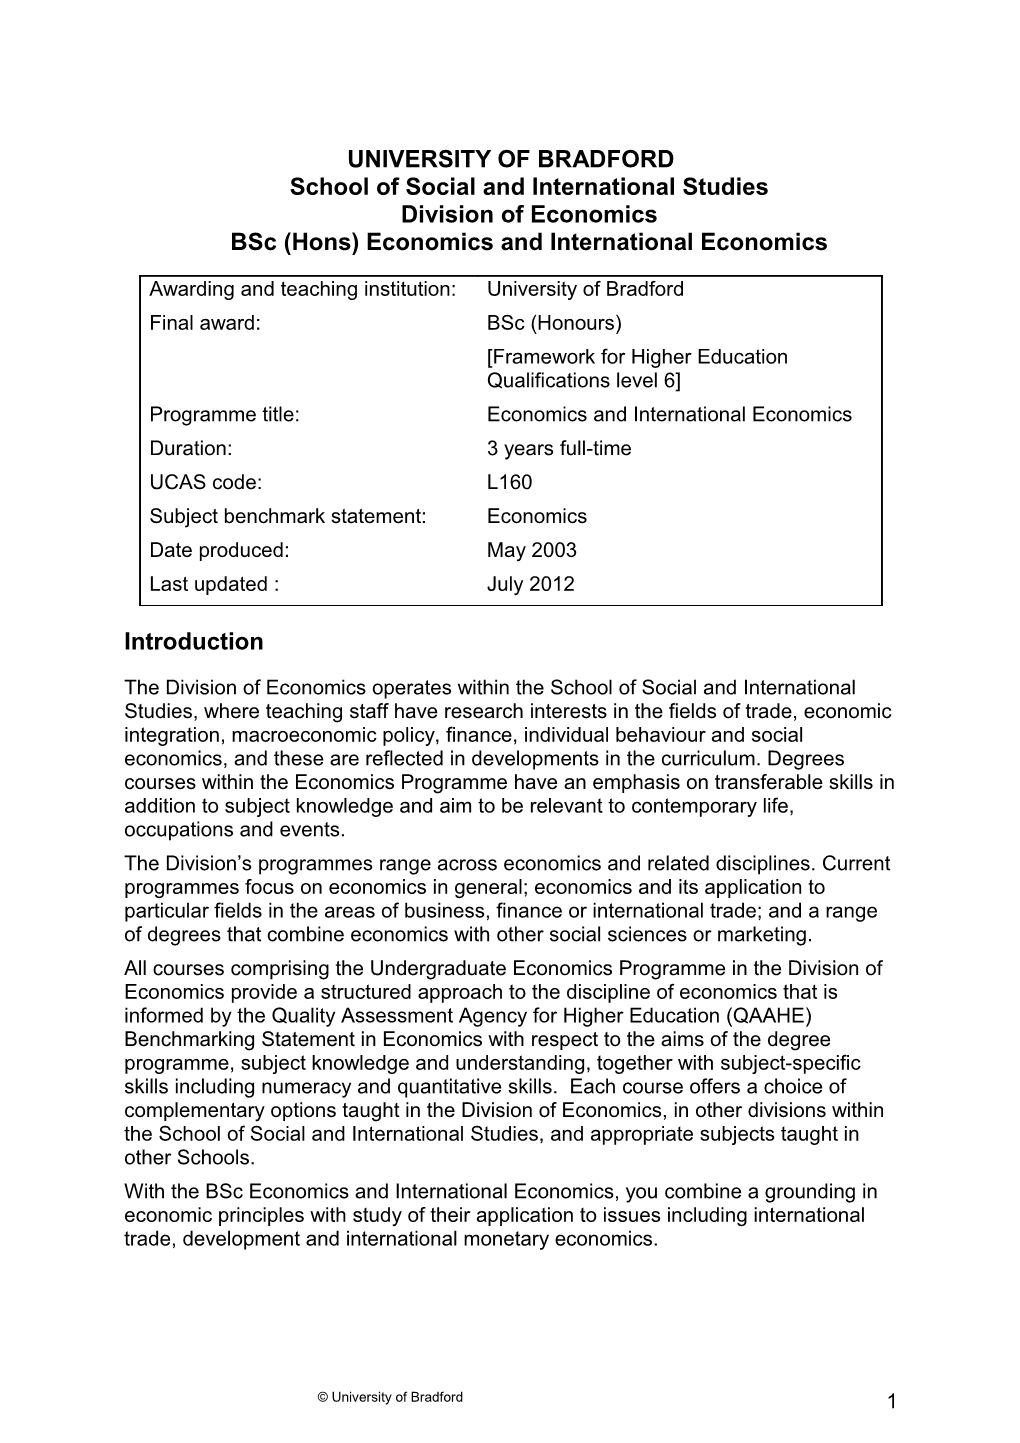 UNIVERSITY of Bradfordschool of Social and International Studiesdivision of Economicsbsc